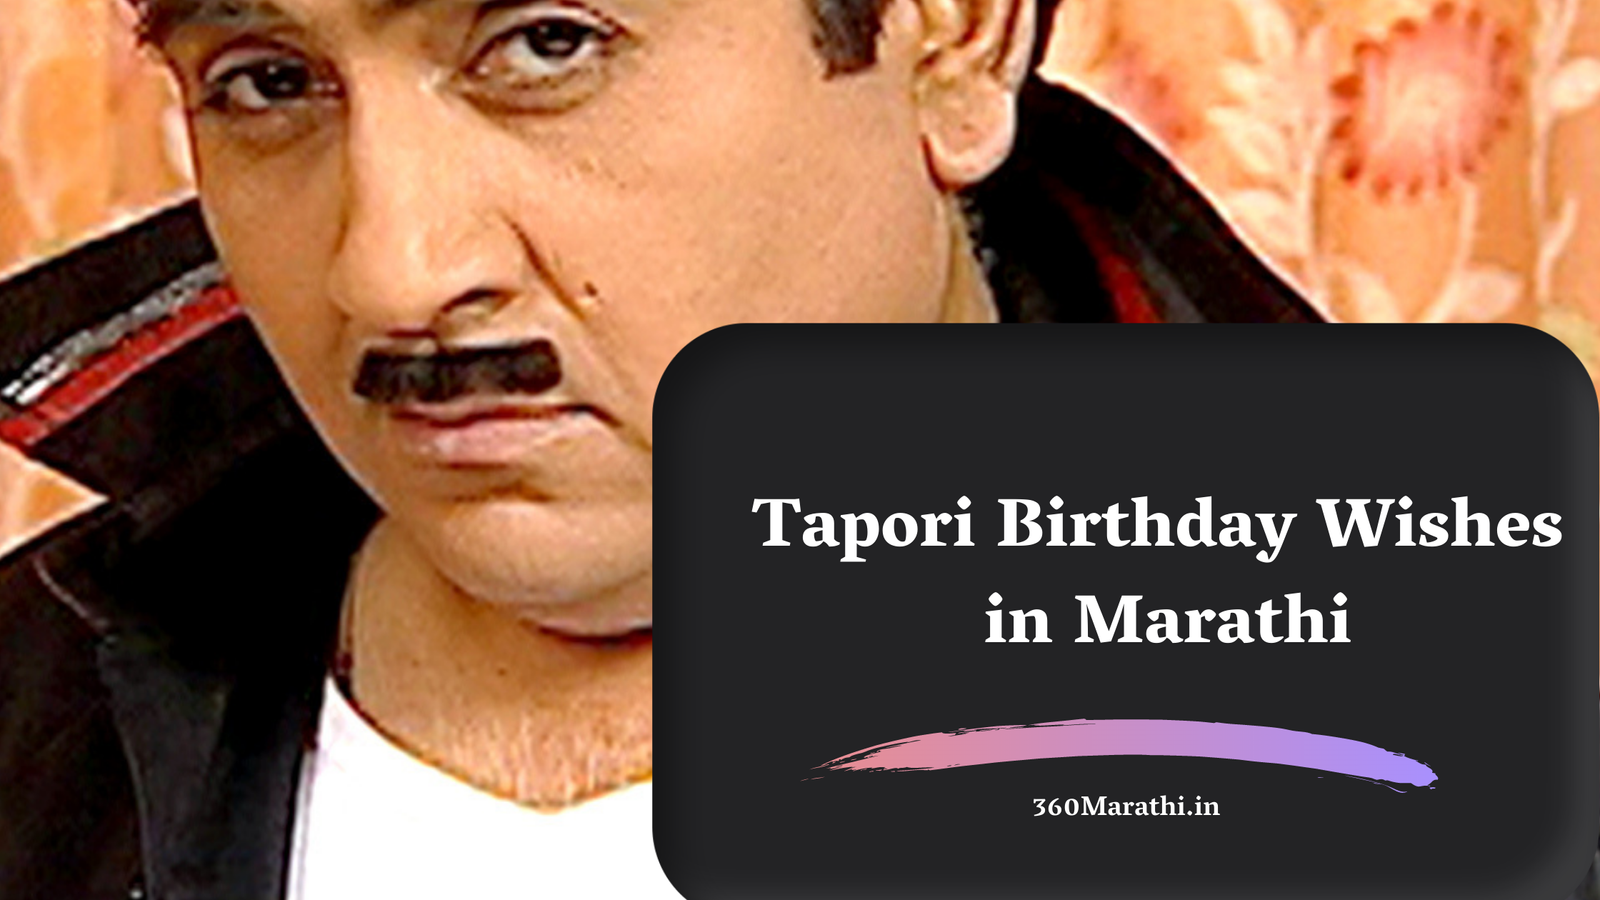 Tapori Birthday Wishes in Marathi